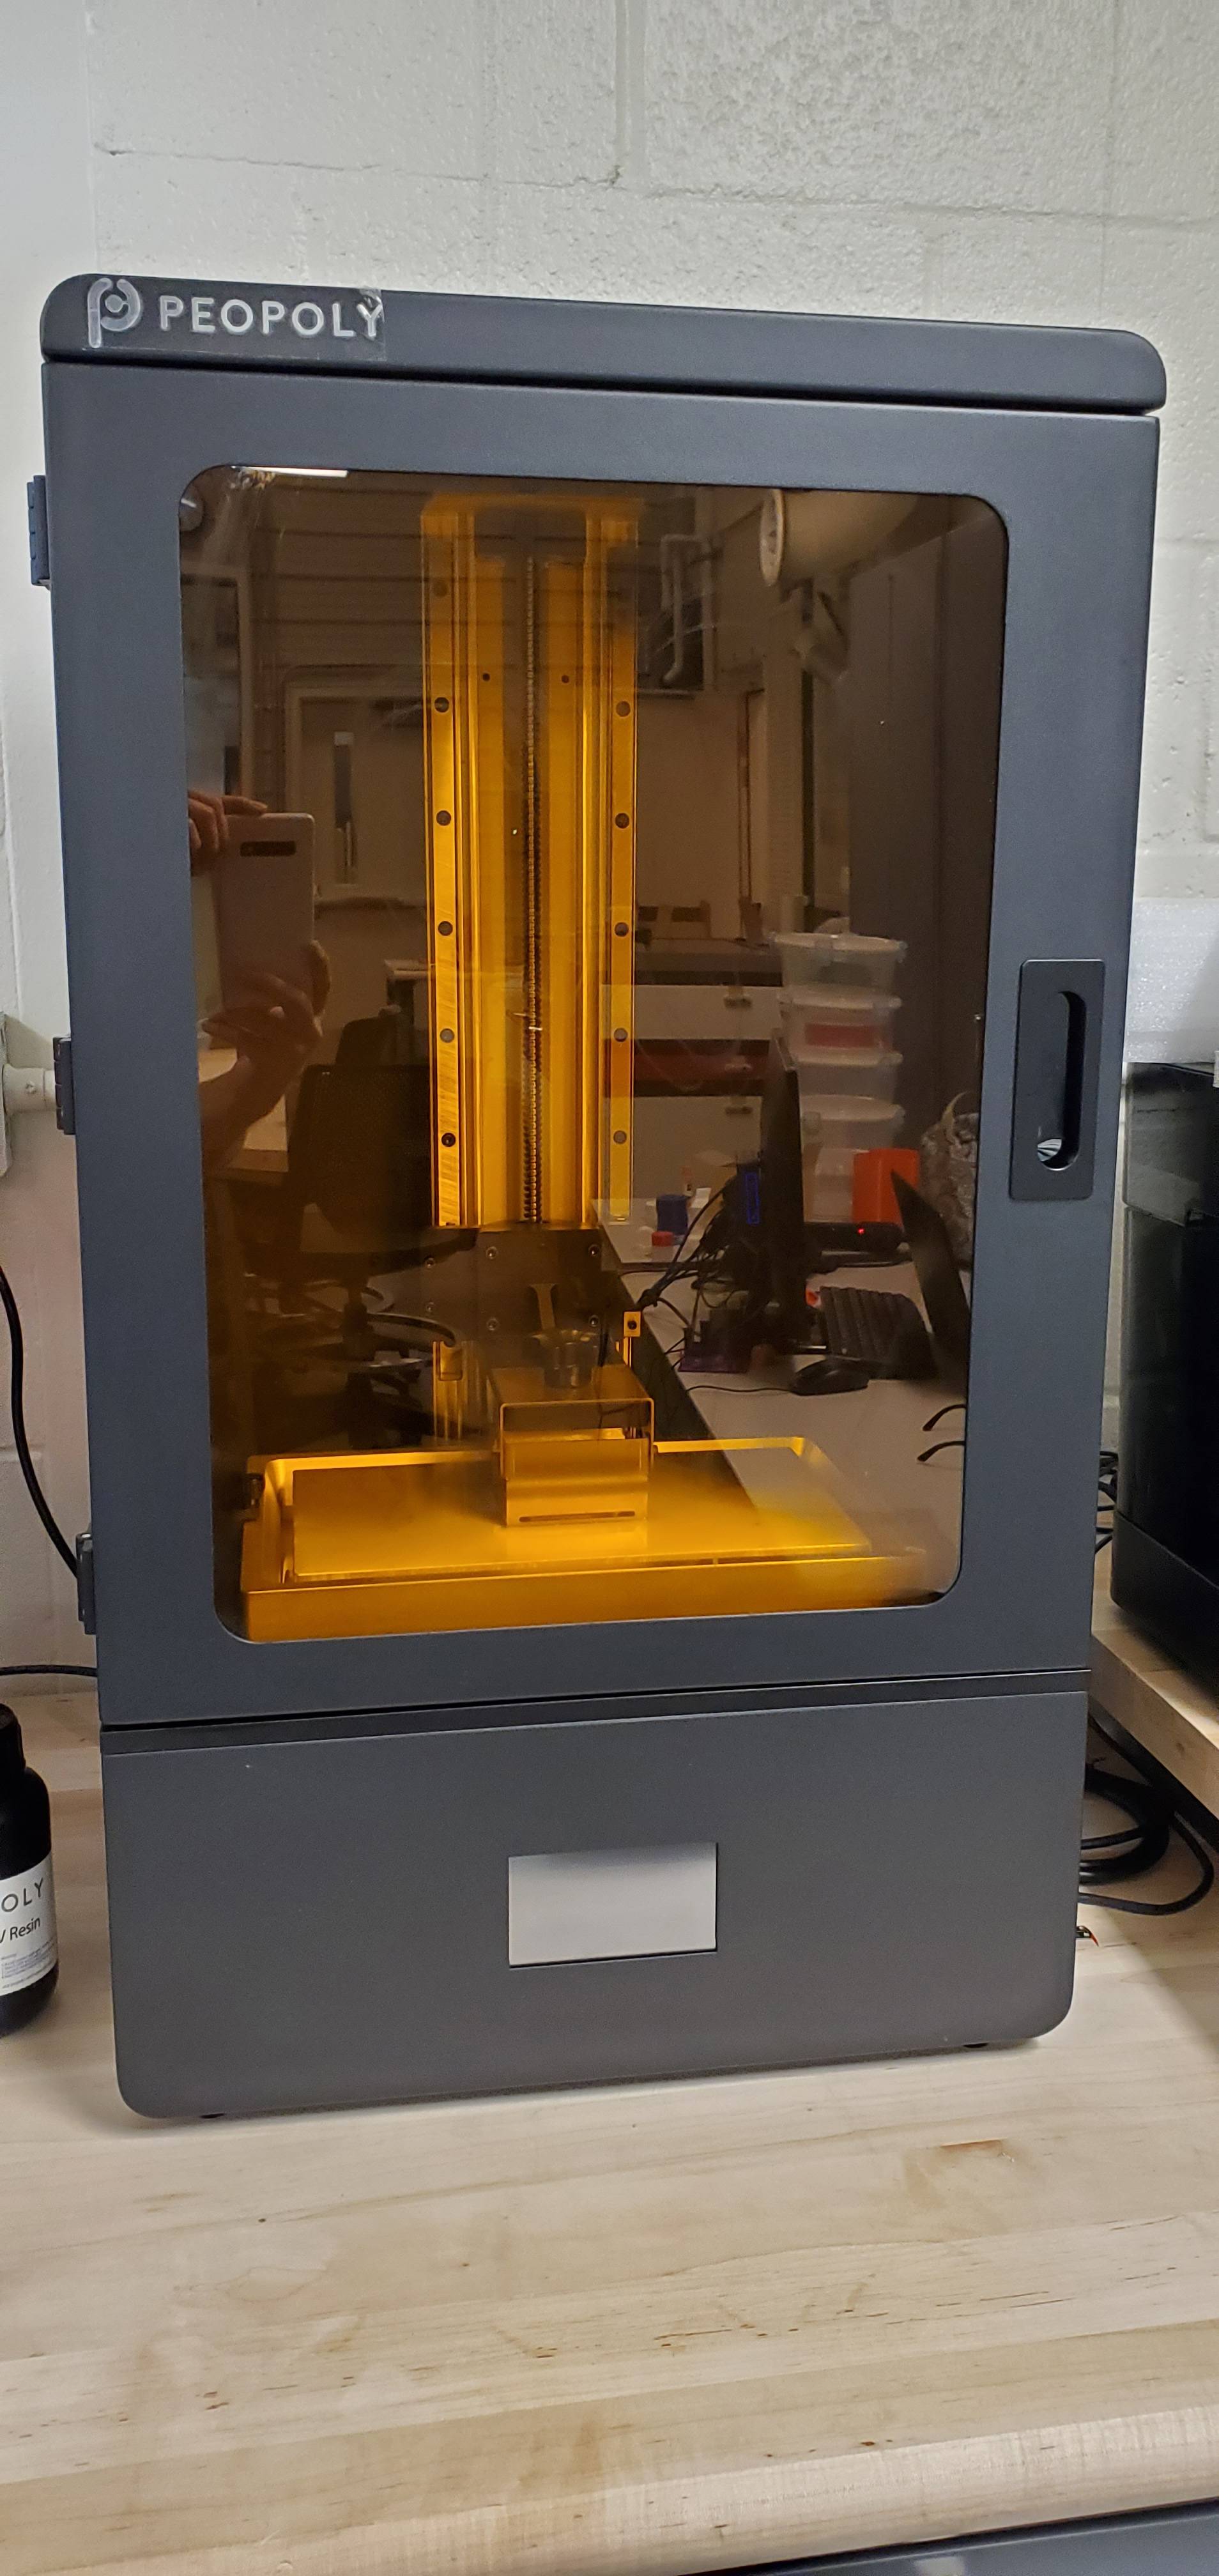 SLA resin 3D printer in the rapid prototyping lab